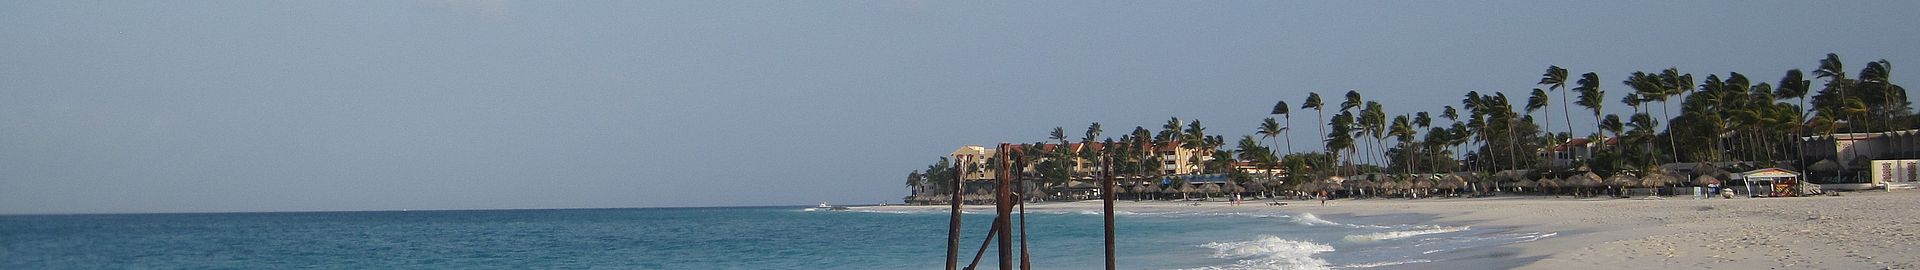 Strandidylle auf Aruba